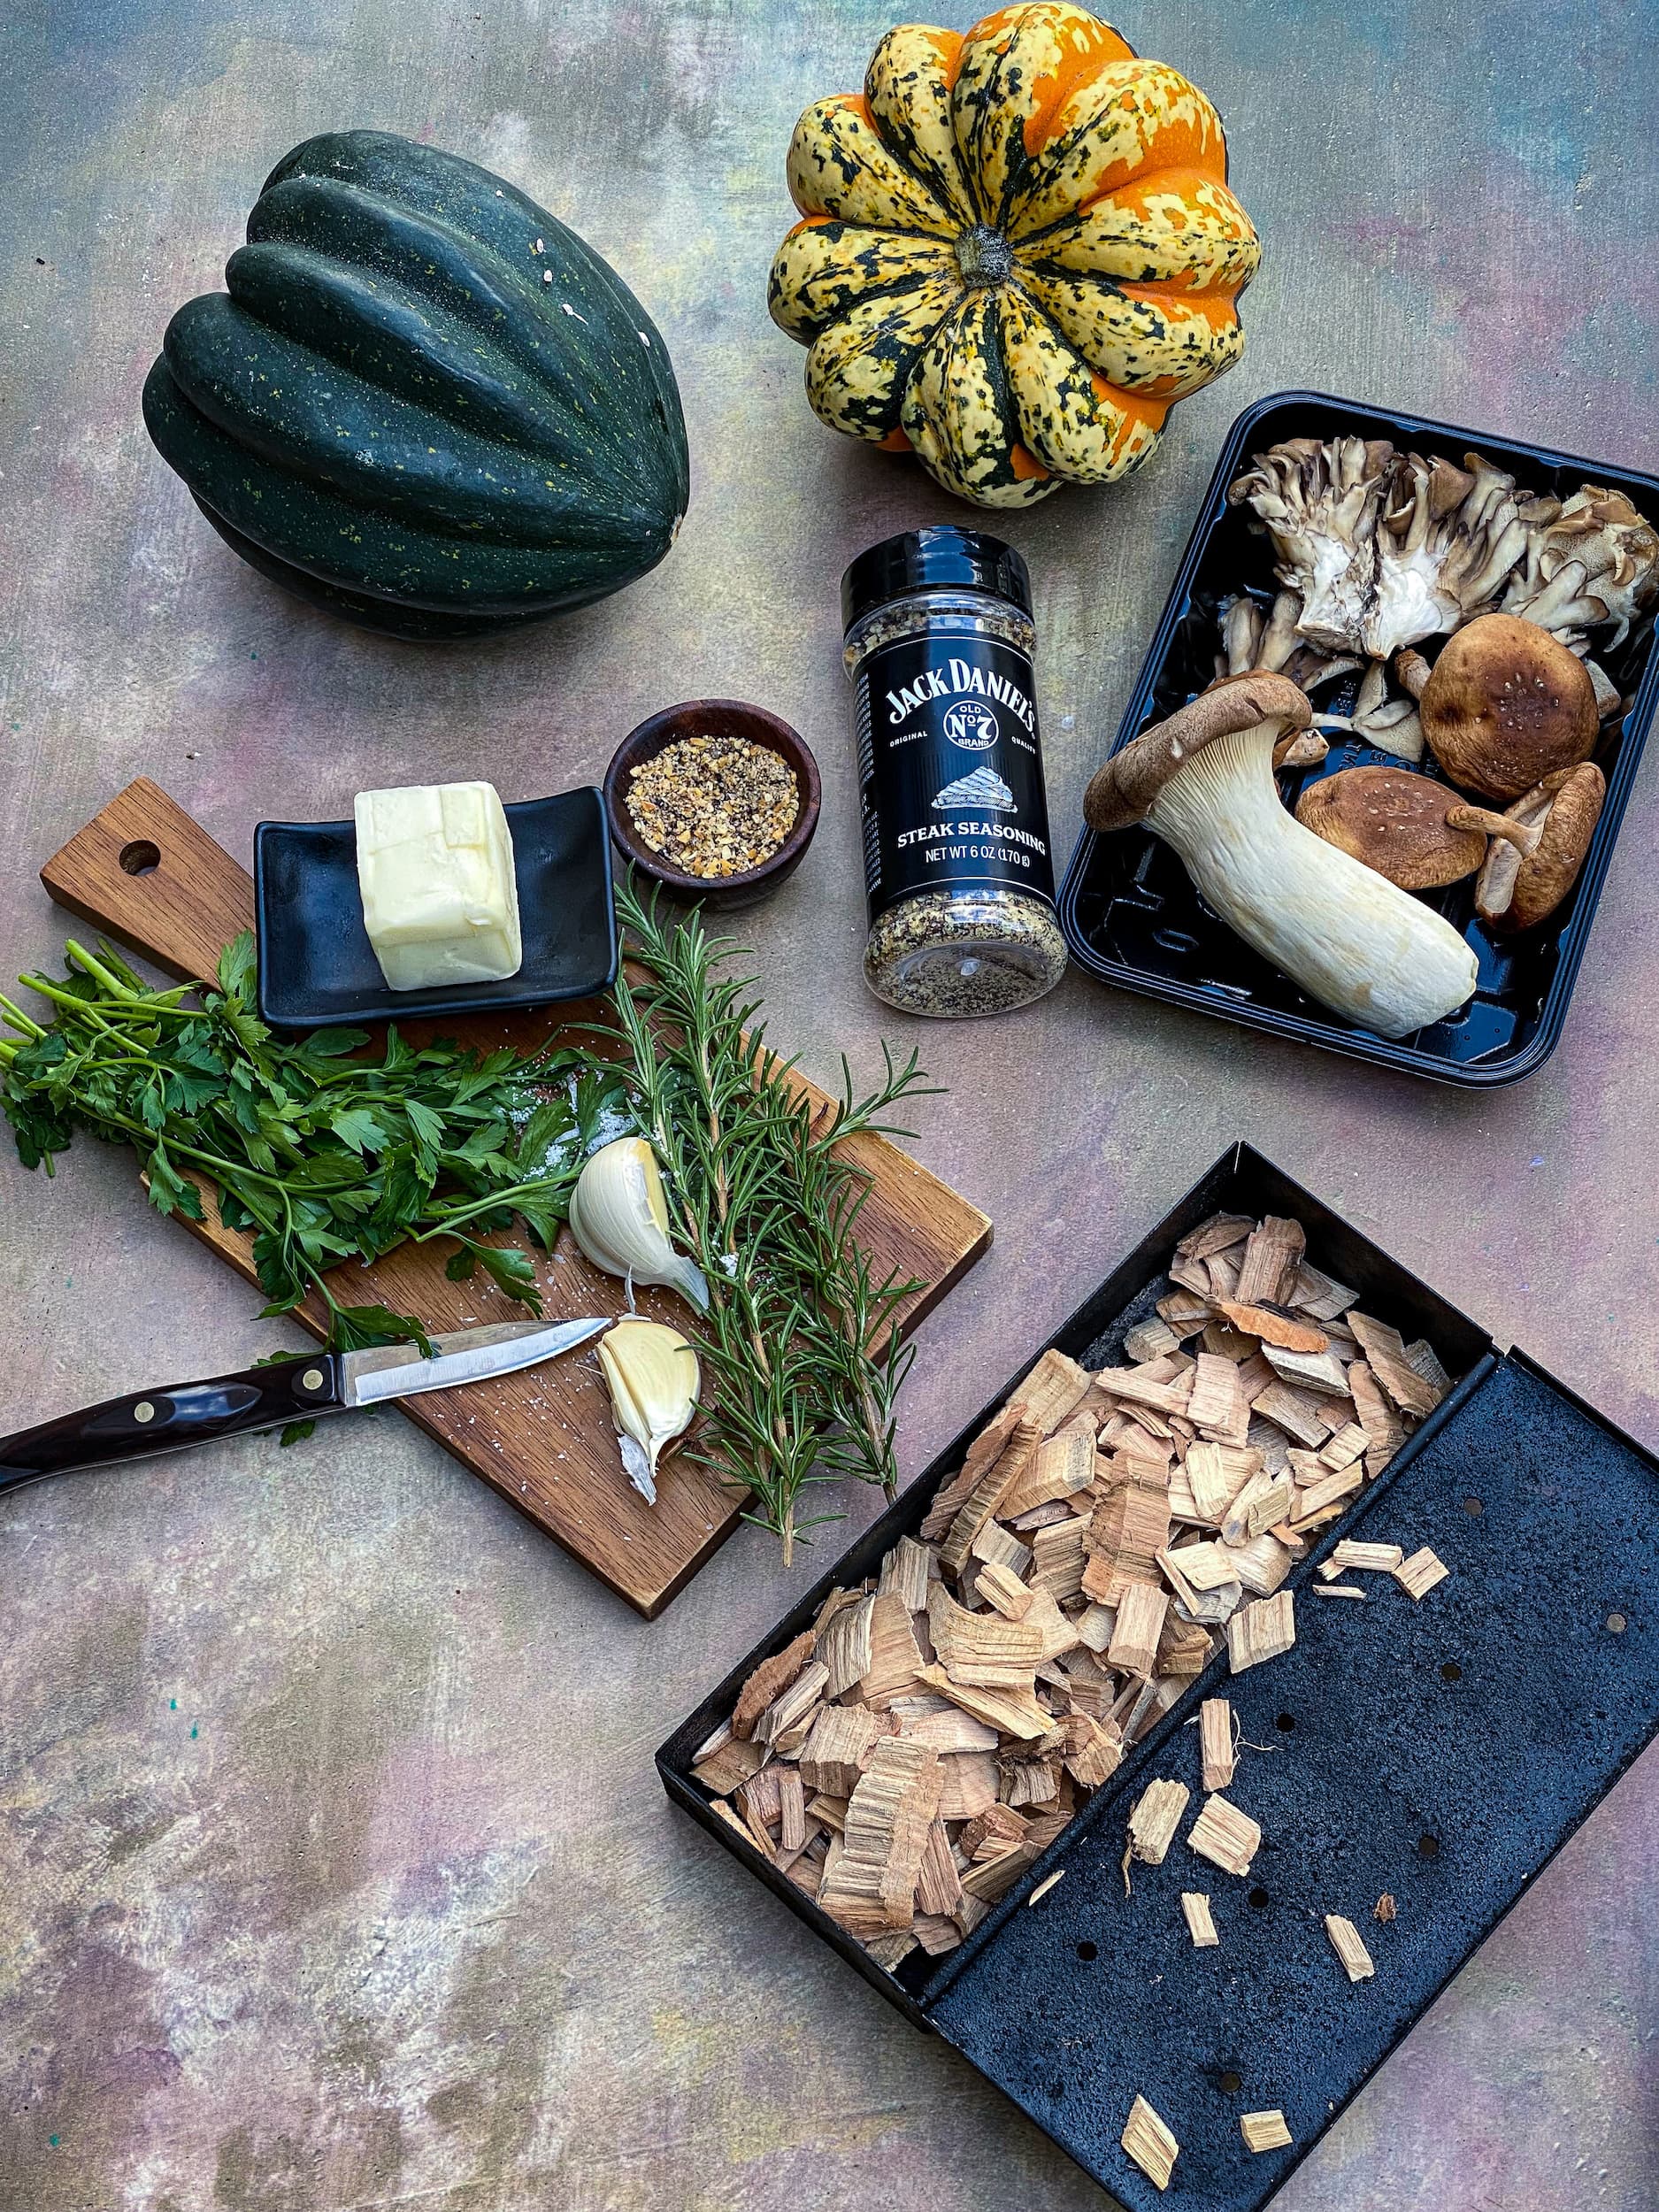 ingredients squash, herbs, butter, mushrooms, garlic and BBQ smoking chips